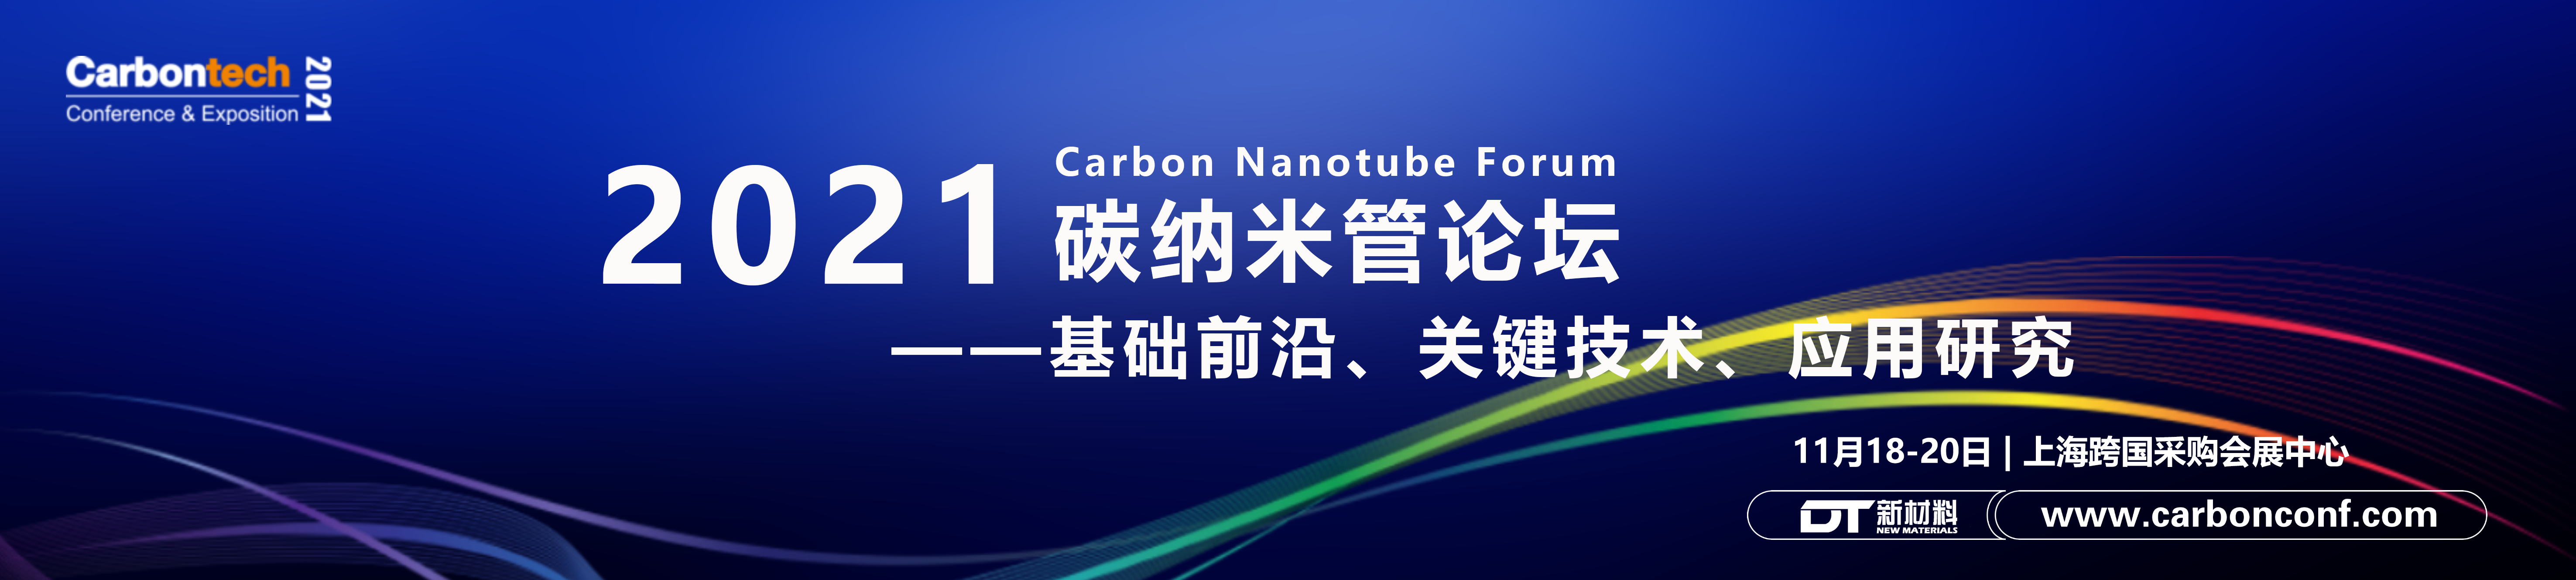 Carbontech 2021碳纳米管论坛